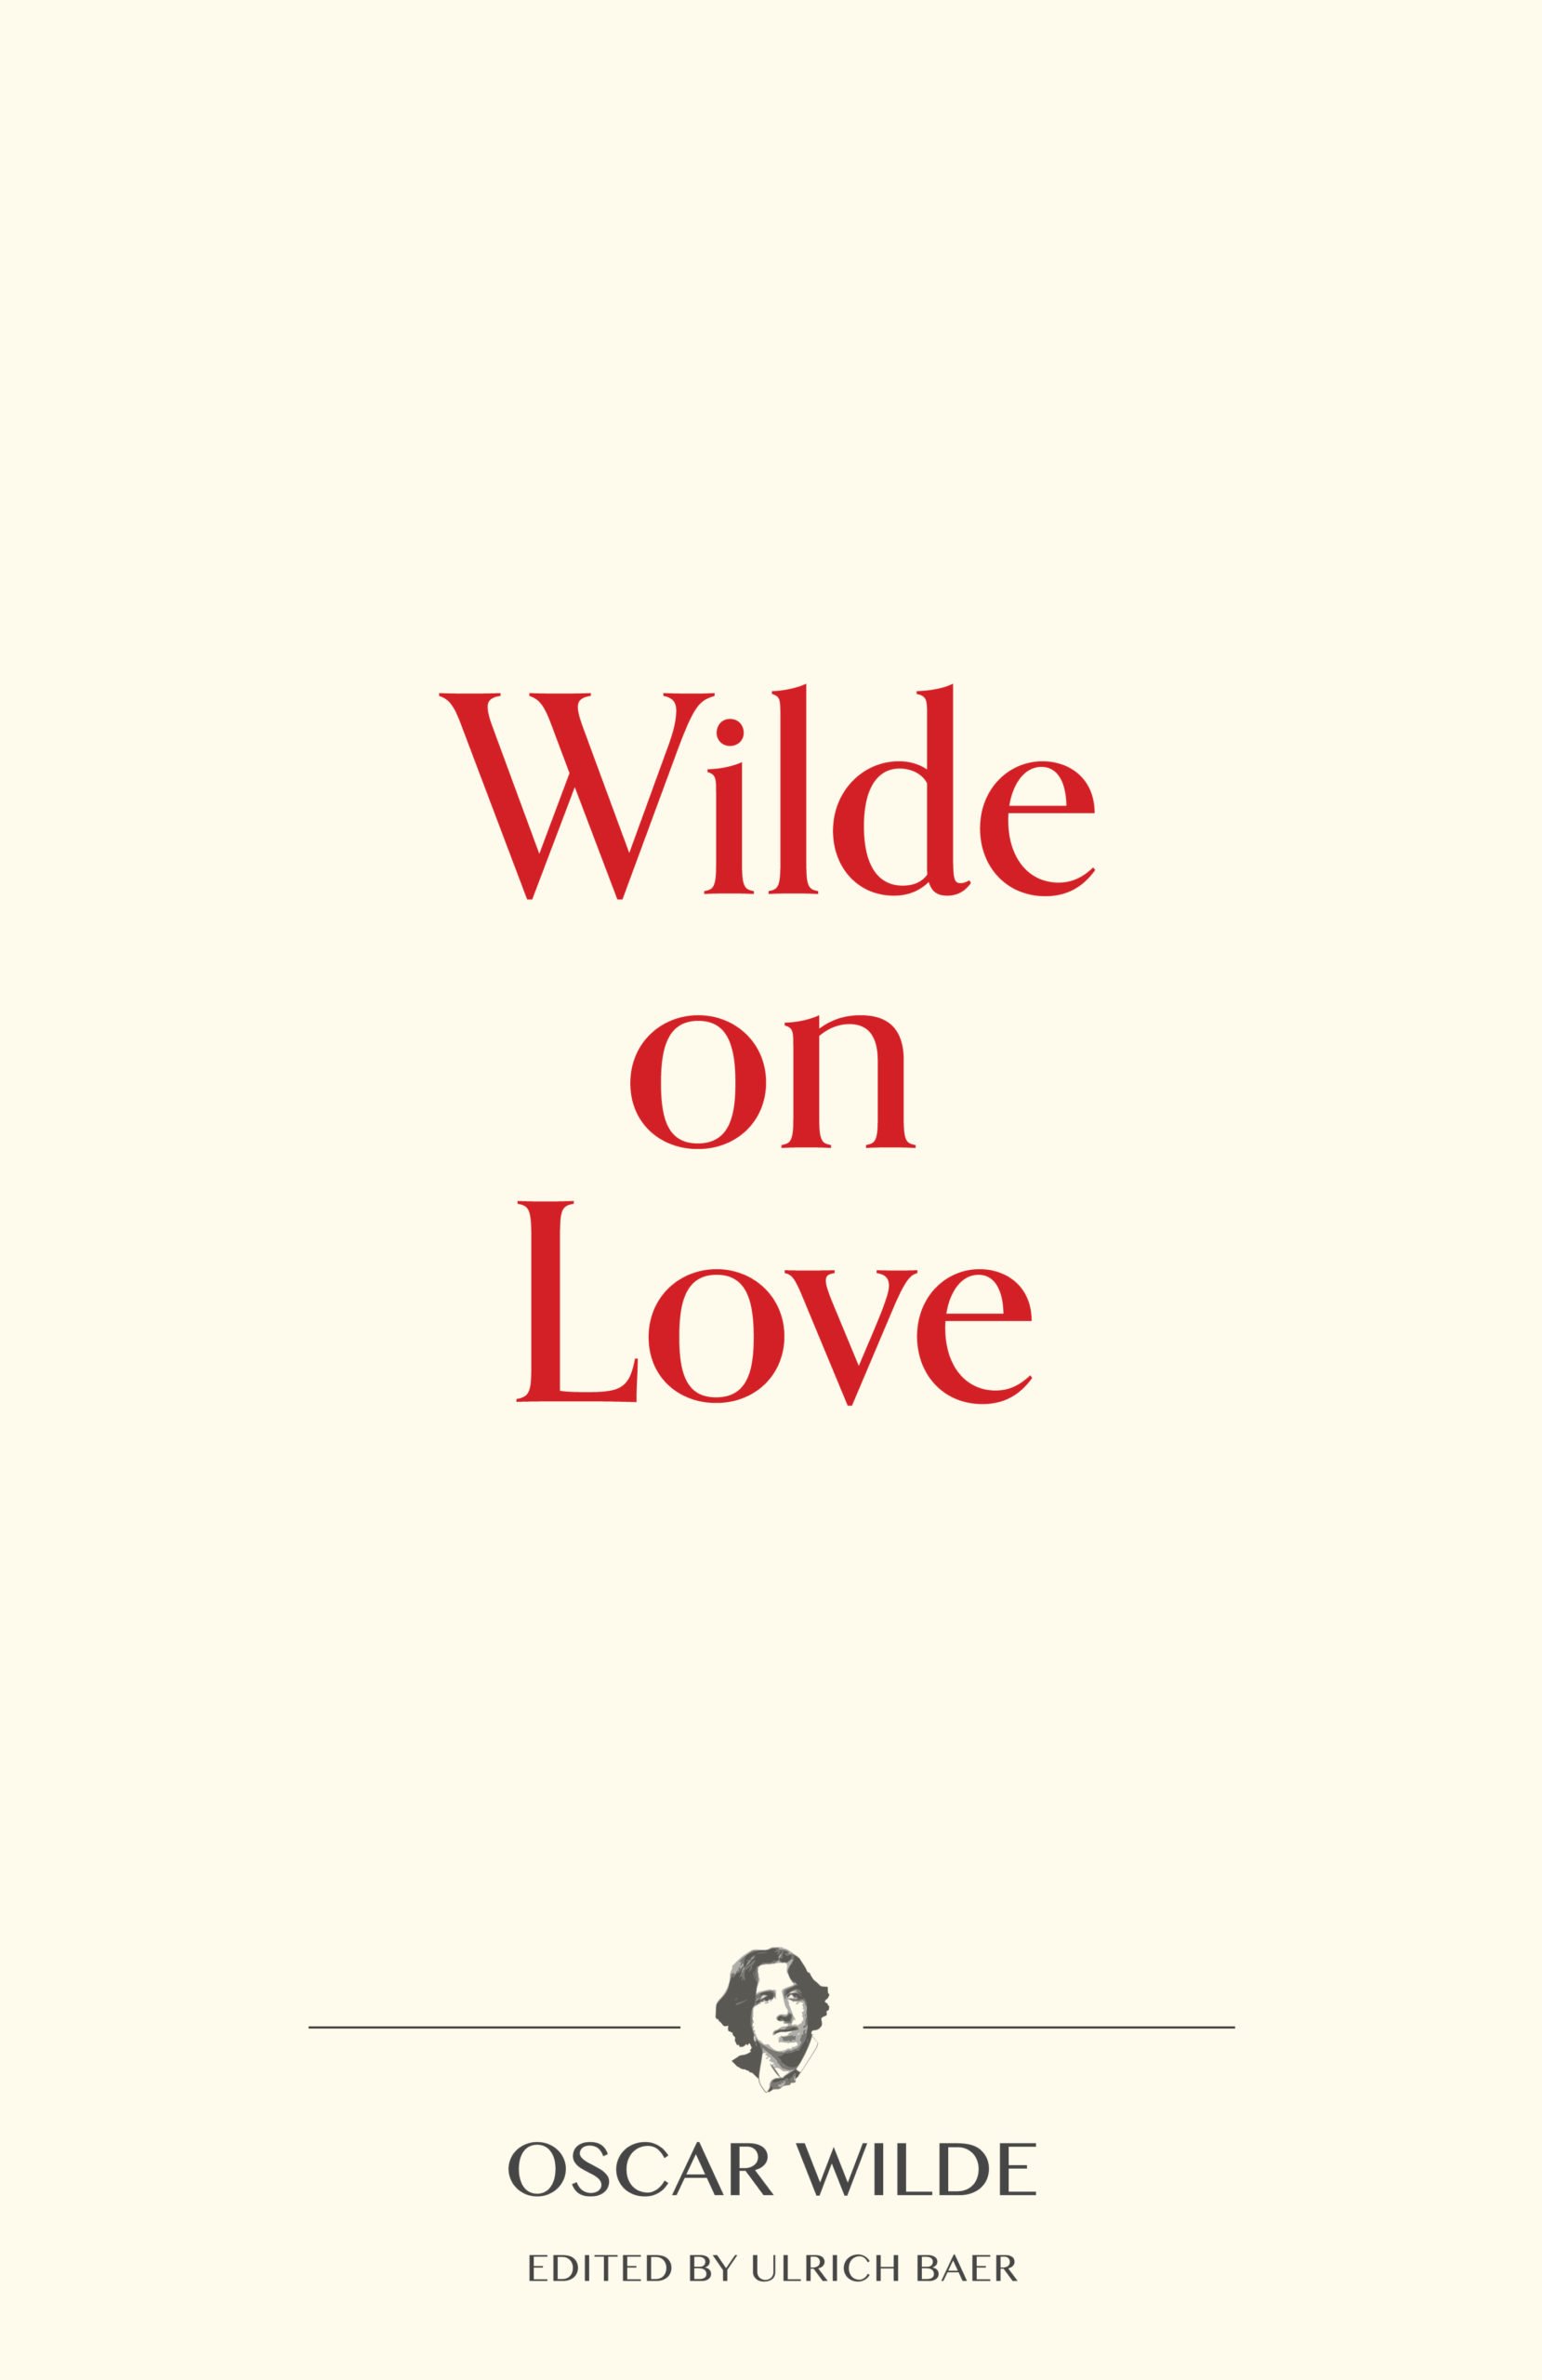 Wilde-on-Love-cover-half-scaled.jpg